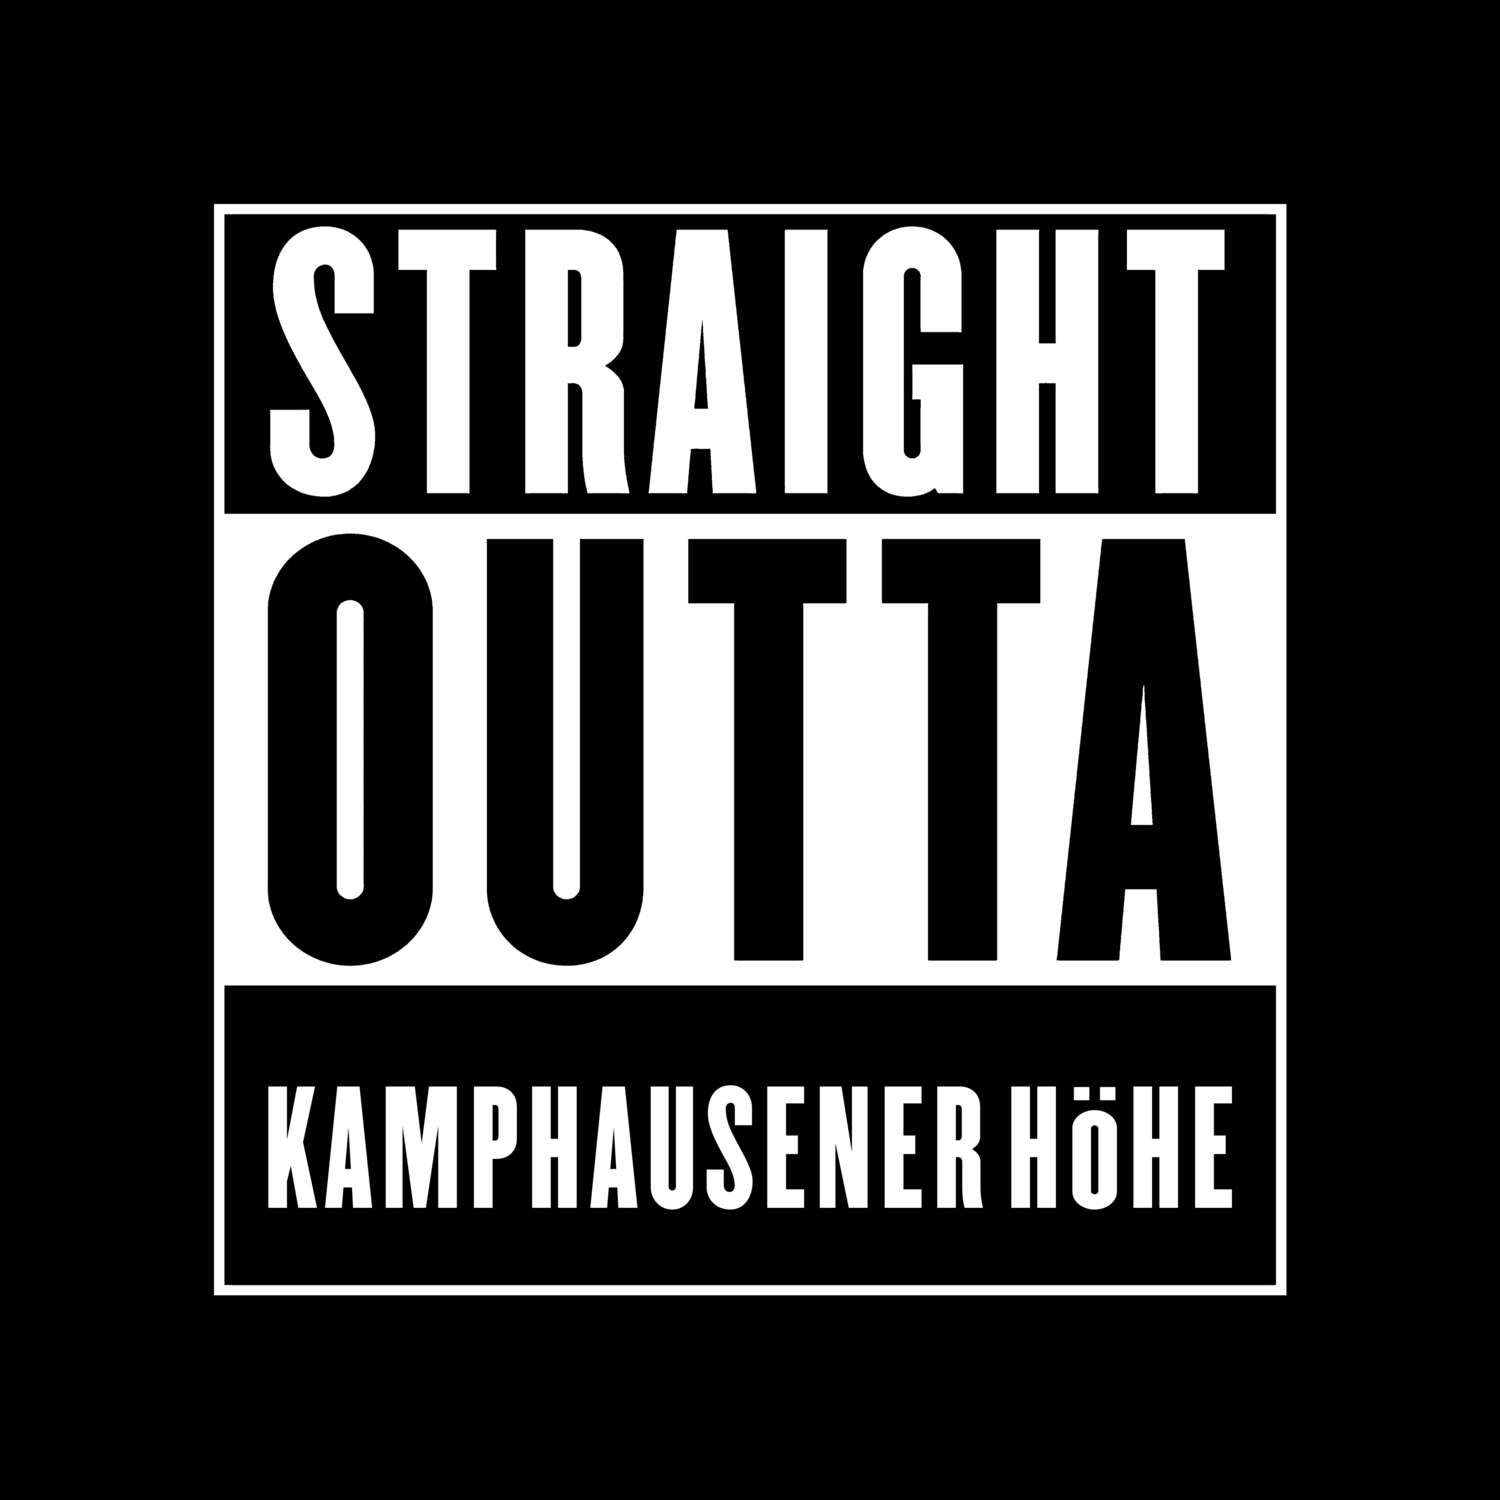 Kamphausener Höhe T-Shirt »Straight Outta«